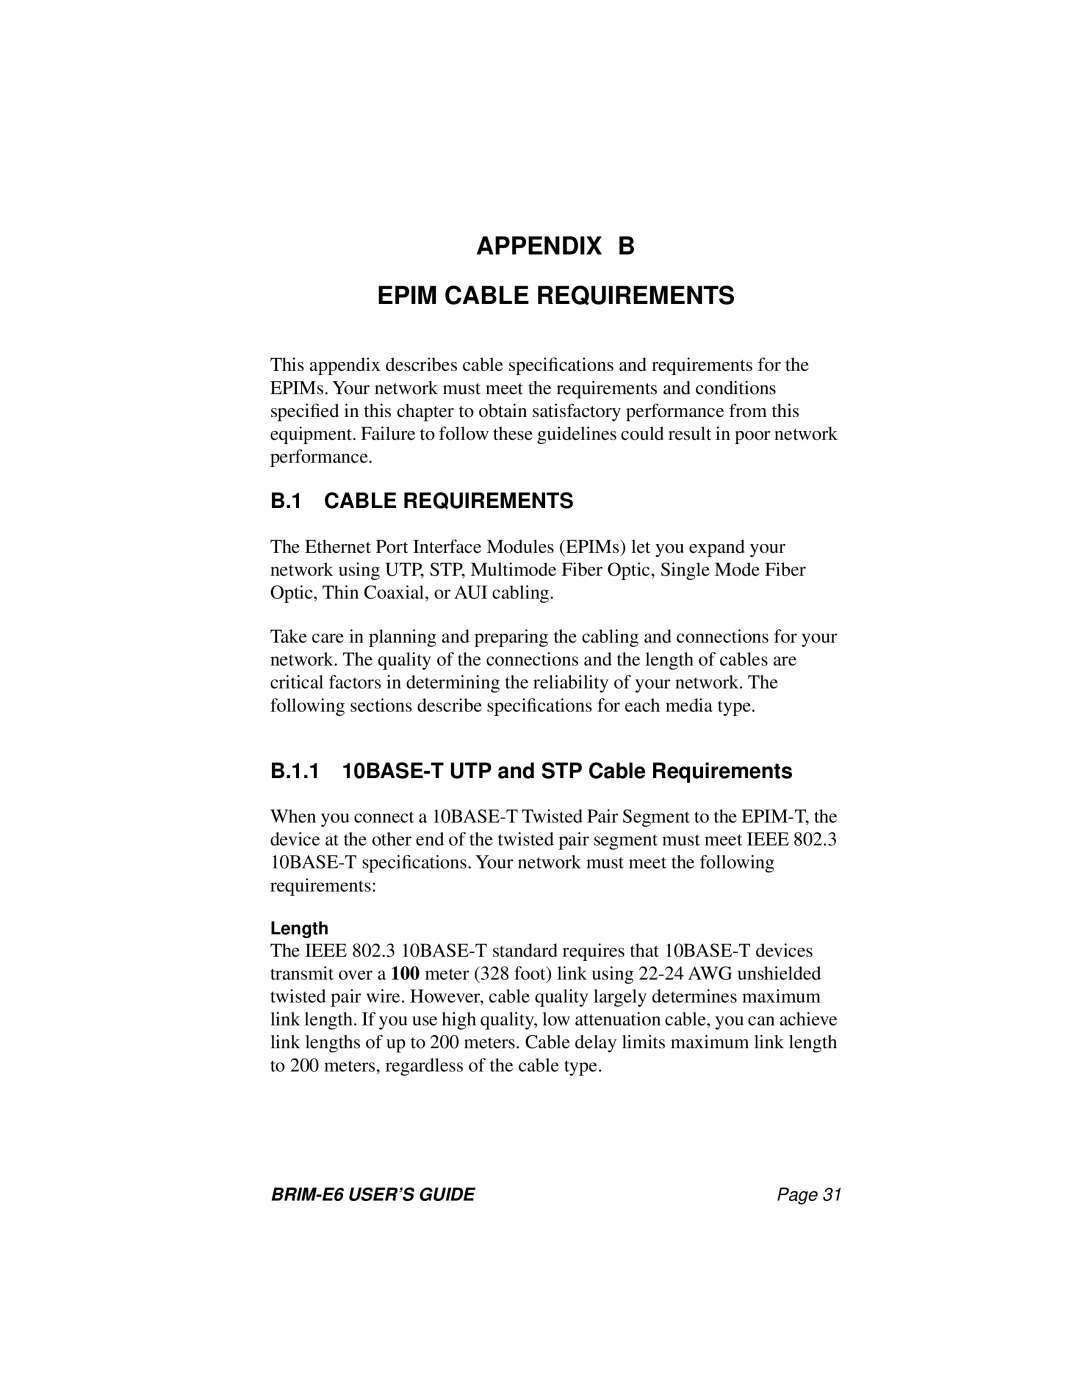 Enterasys Networks BRIM-E6 manual Appendix B Epim Cable Requirements, 1 10BASE-T UTP and STP Cable Requirements 